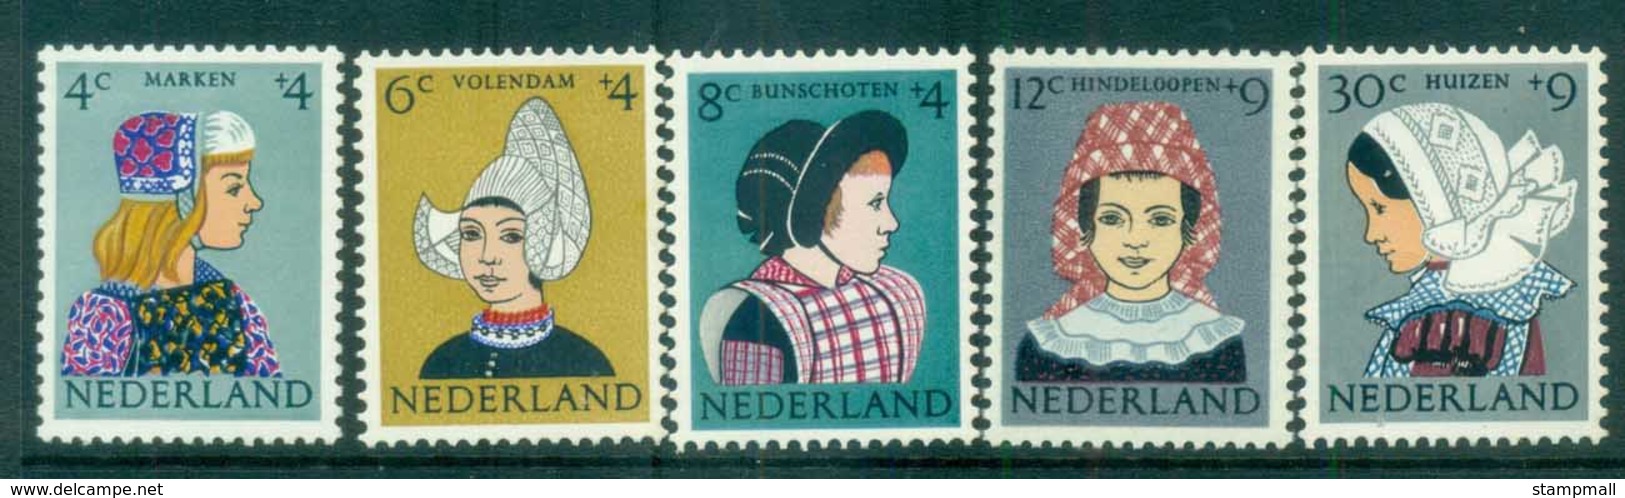 Netherlands 1960 Charity, Child Welfare, Regional Costumes MLH Lot76518 - Non Classés